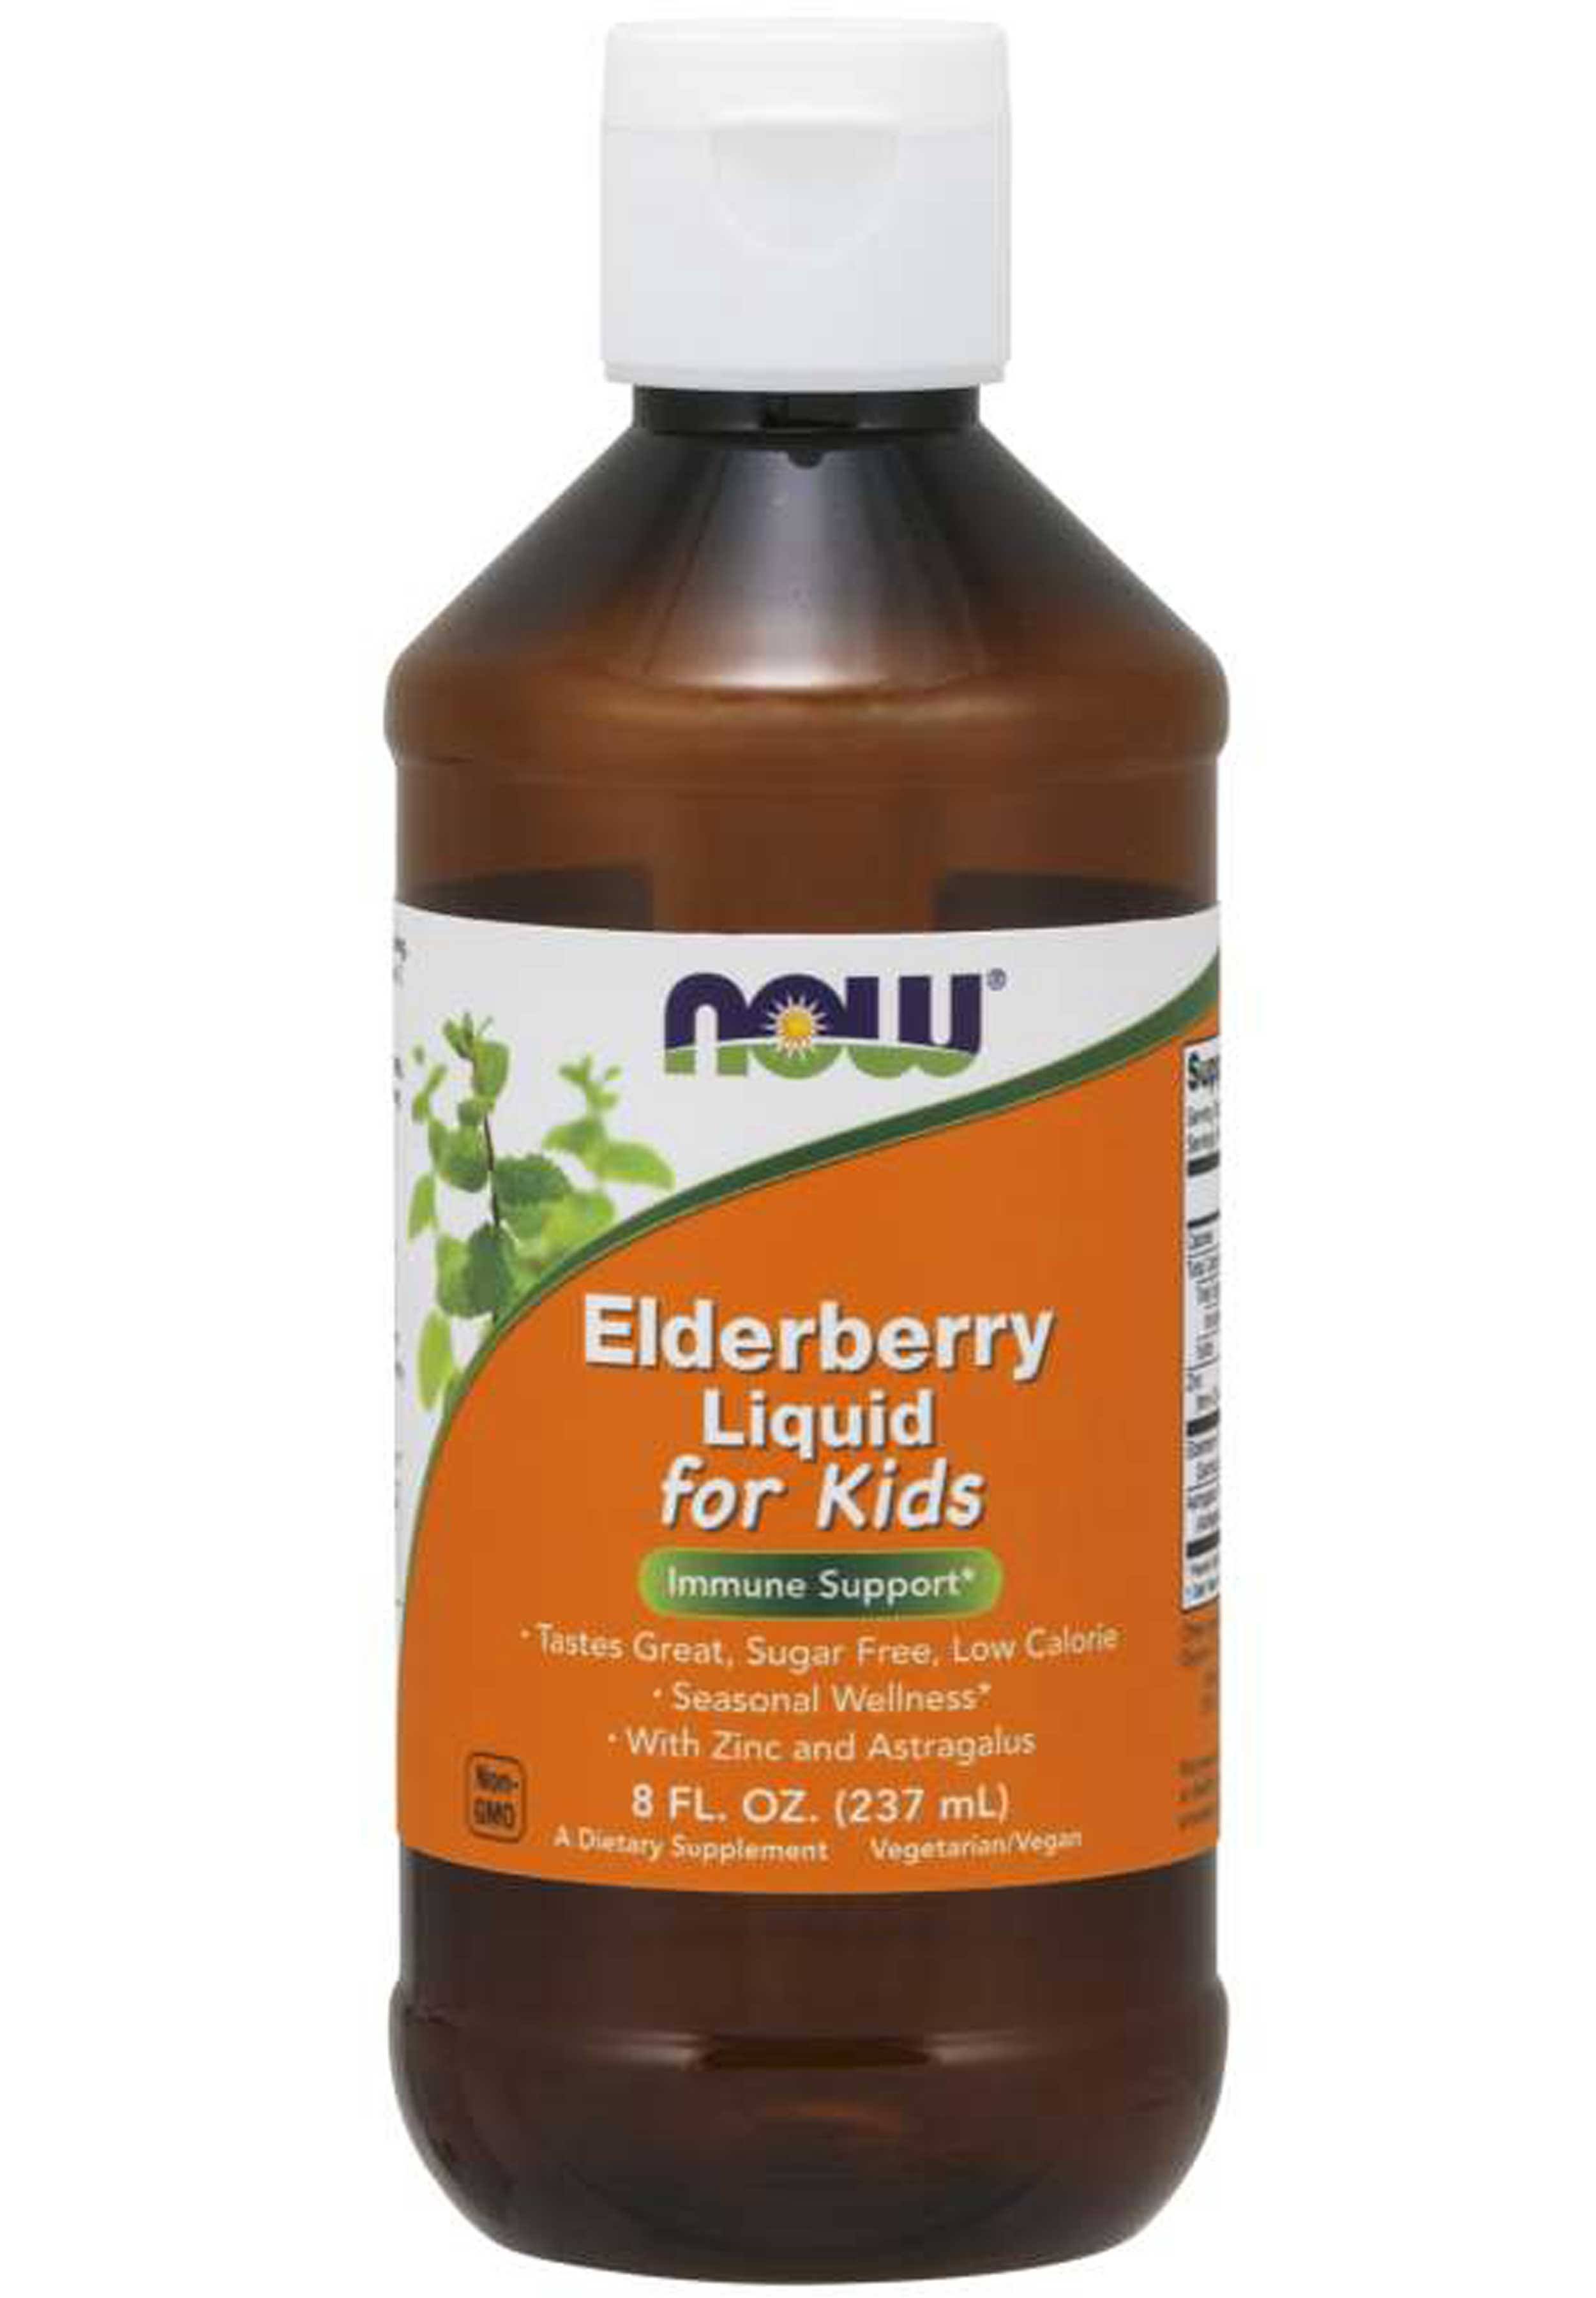 Now Elderberry Liquid for Kids 8 fl oz